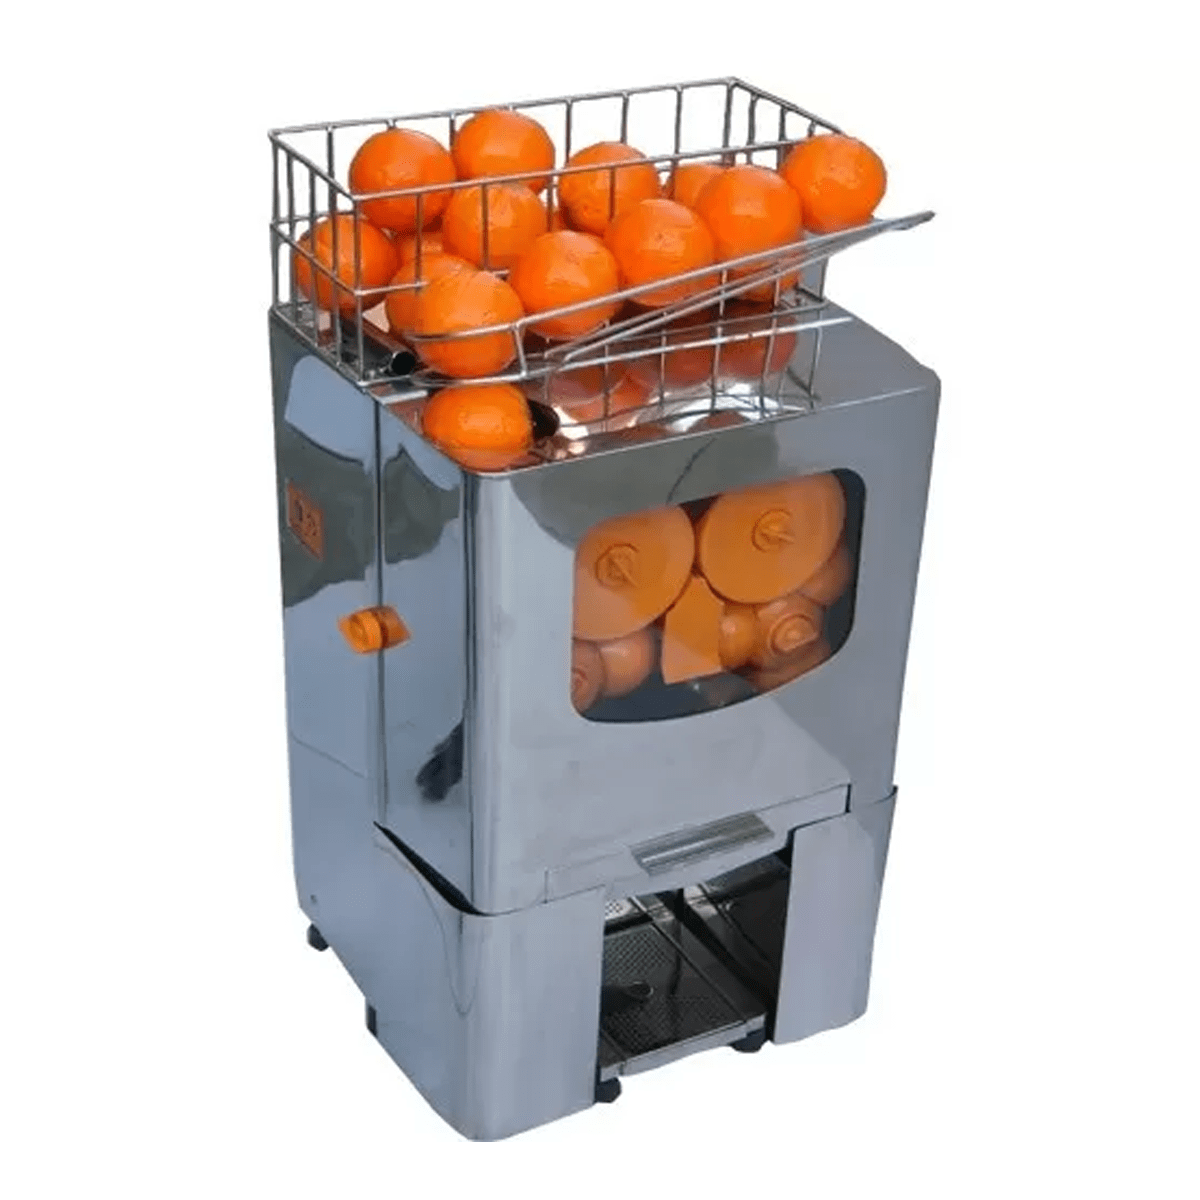 2000E-3 Commercial automatic electric orange juicer